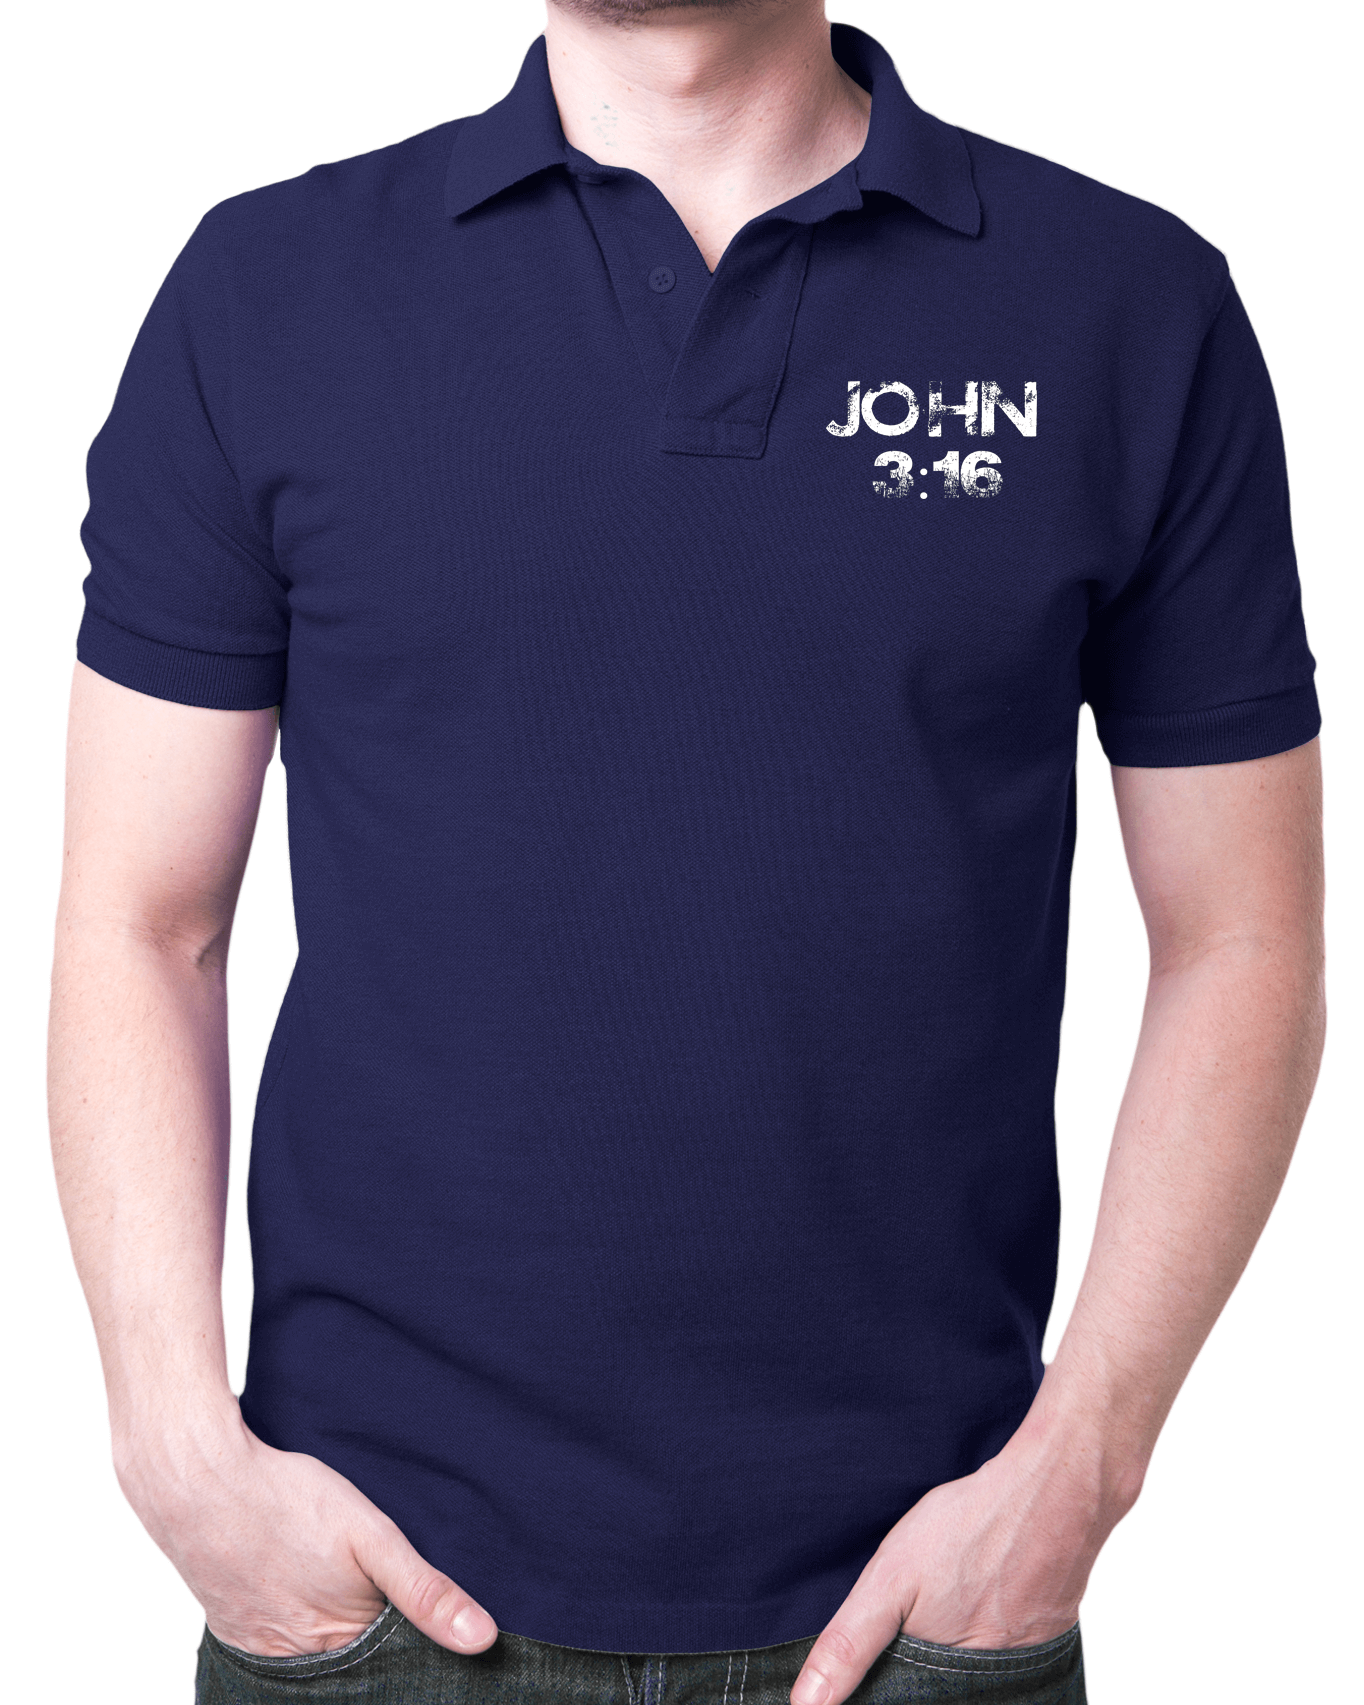 Living Words Men Polo T Shirt S / Navy Blue John 3:16 - Polo T Shirt